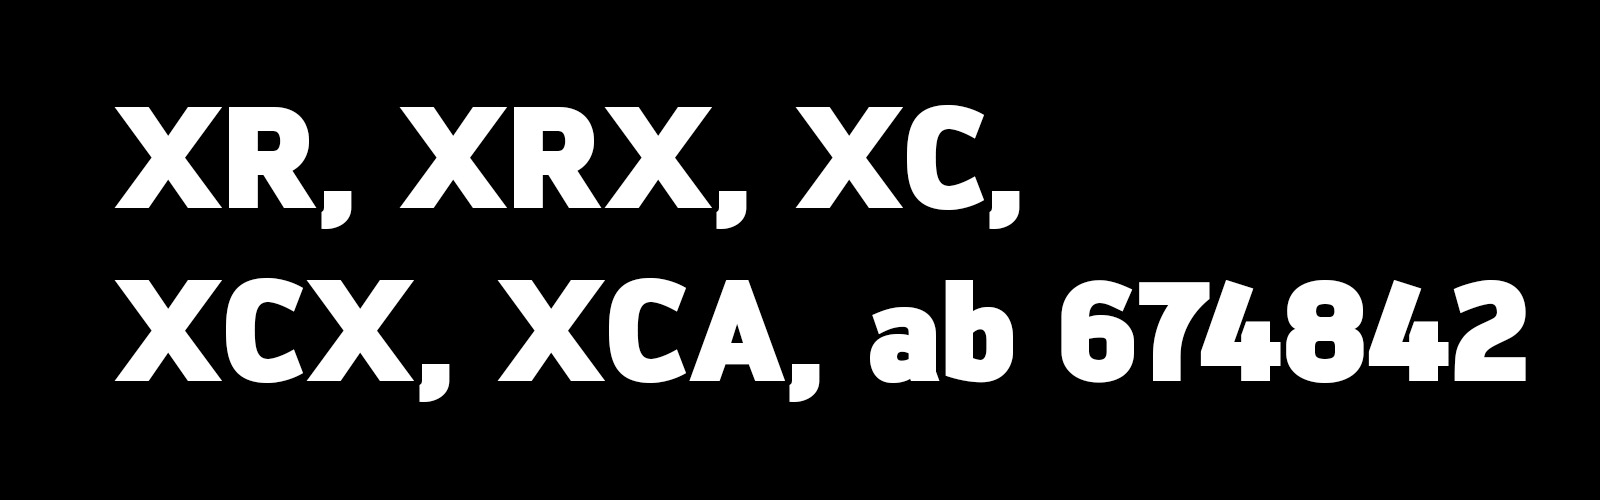 XR, XRX, XRT, XC, XCX, XCA, Ab 674842